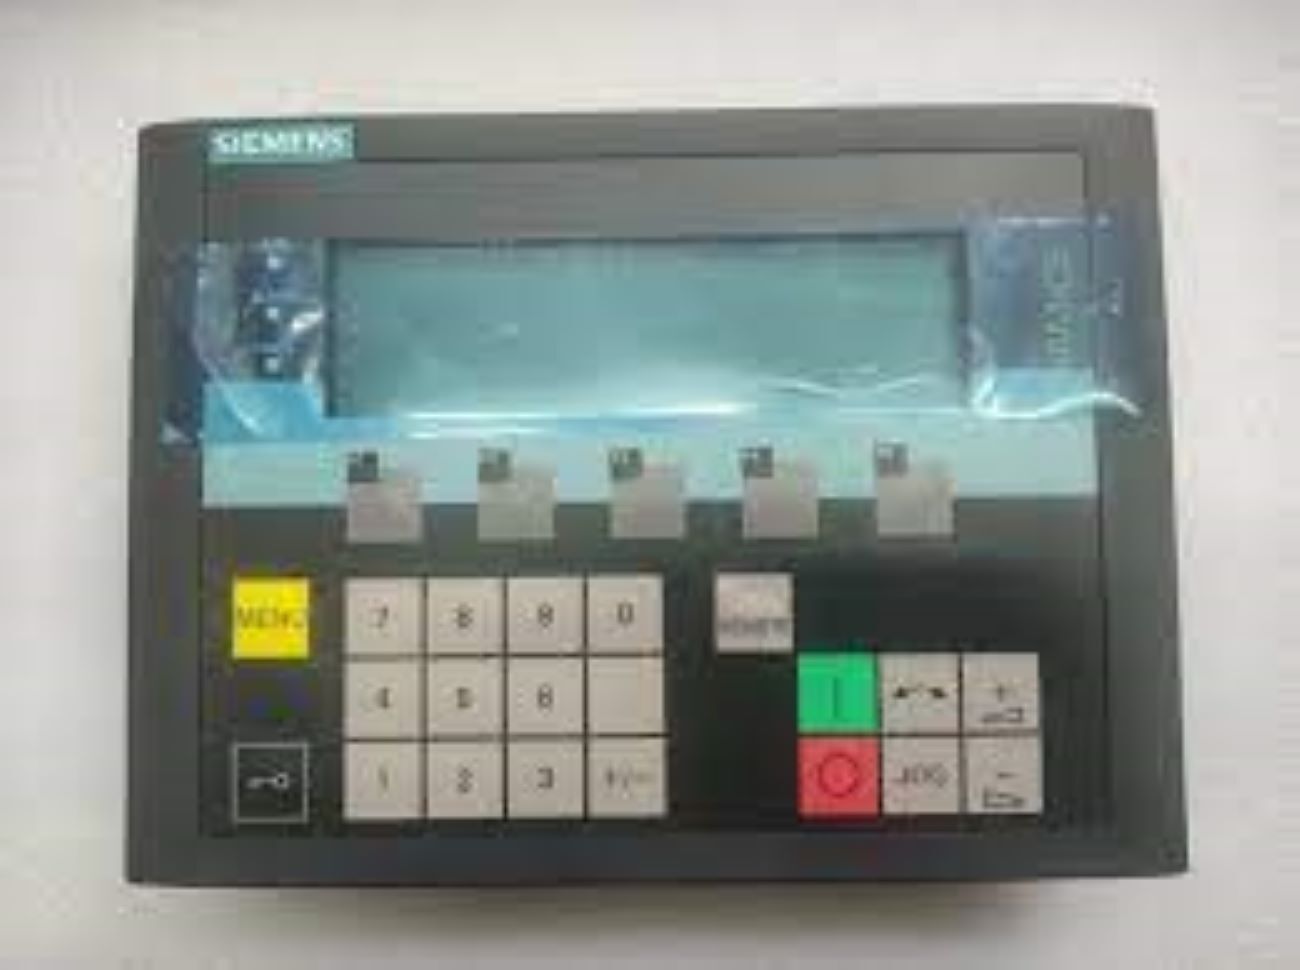 6SL3055-0AA00-4CA5-siemens programmable logic controller